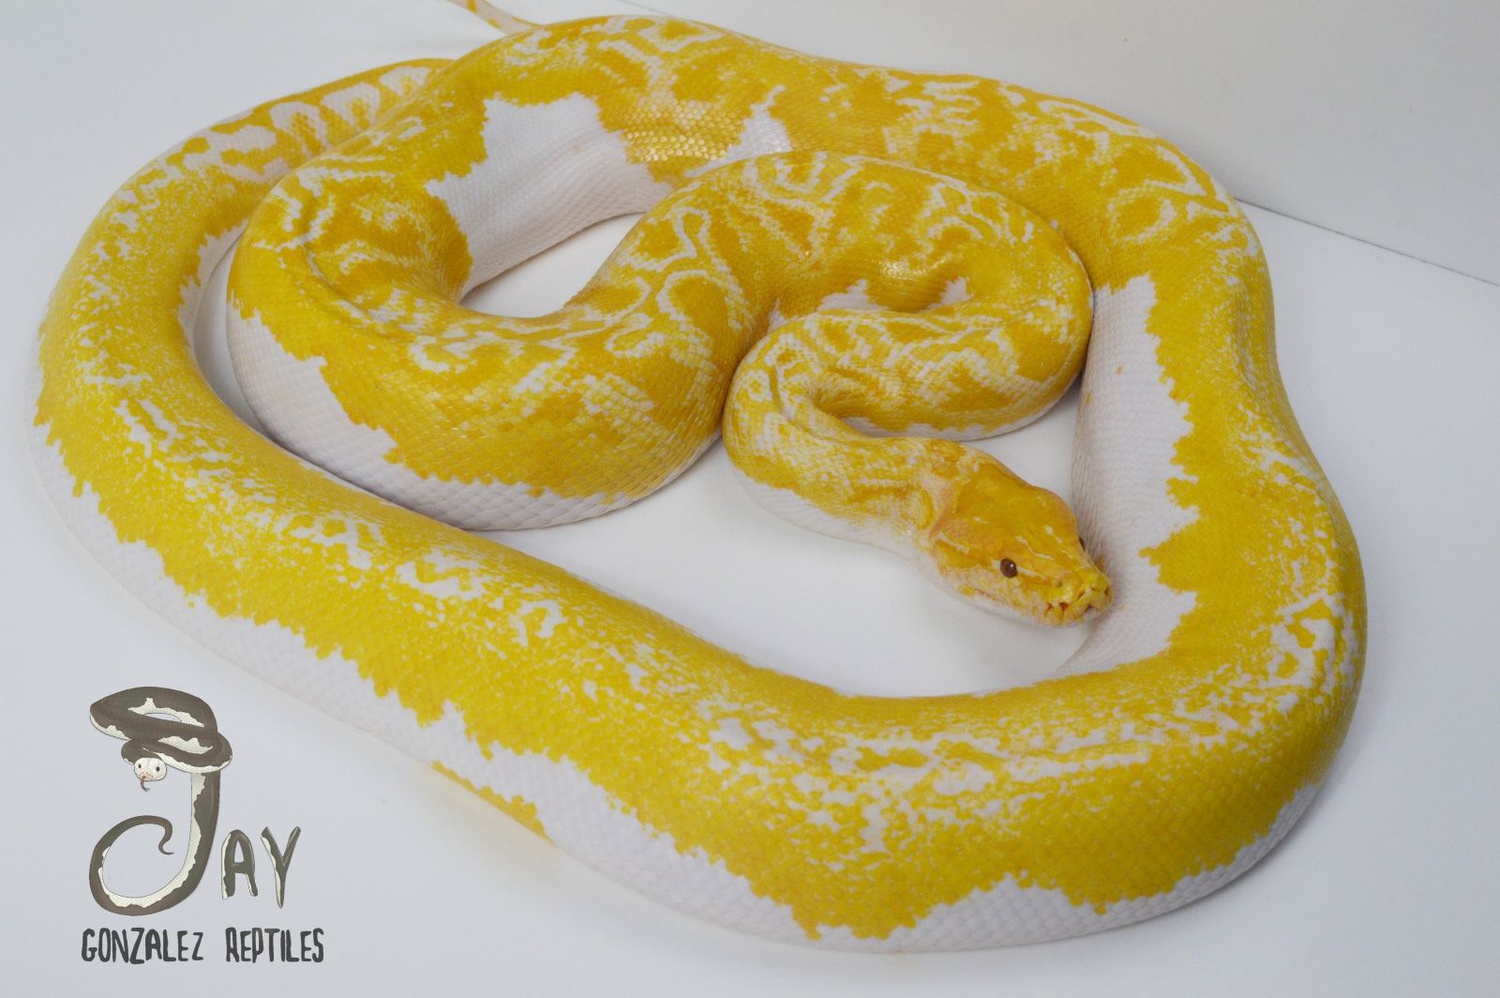 Albino Pied Burmese Python by Jay Gonzalez Reptiles